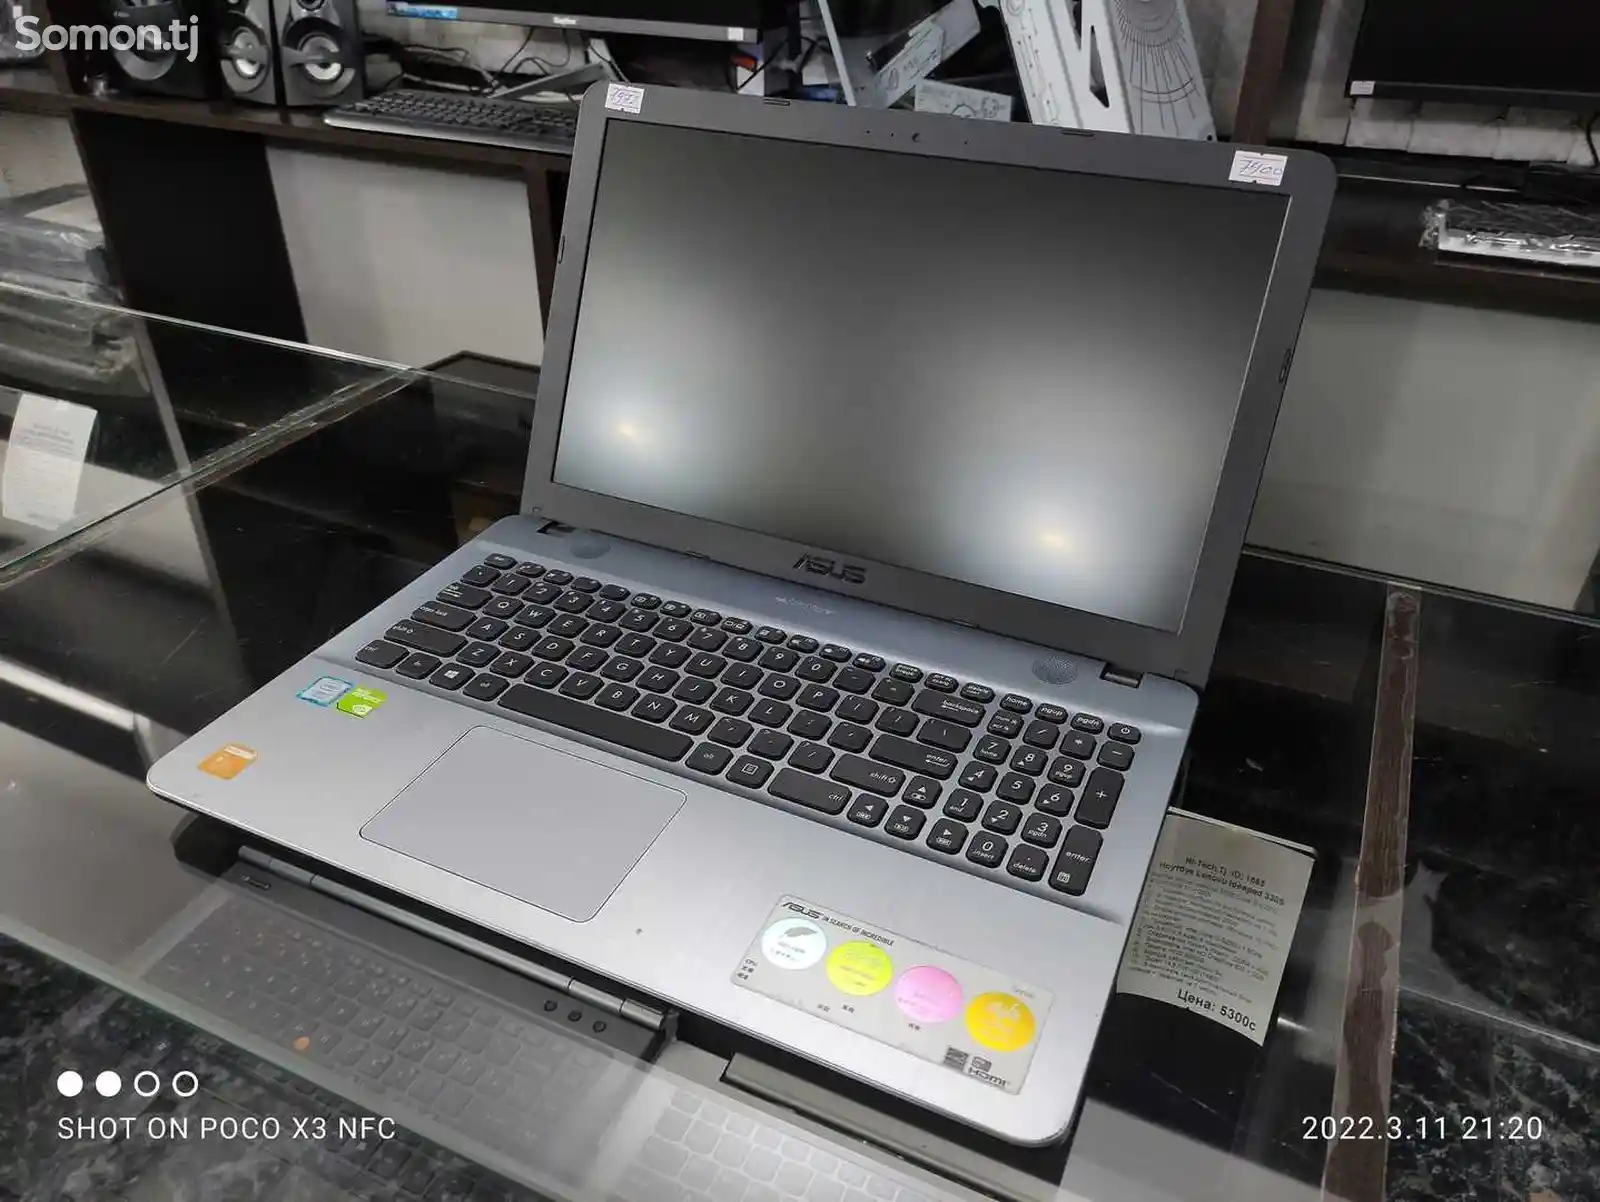 Игровой ноутбук Asus X541UJ Core i7-7500U 2.9GHz 8gb/256gb SSD 7TH GEN-1